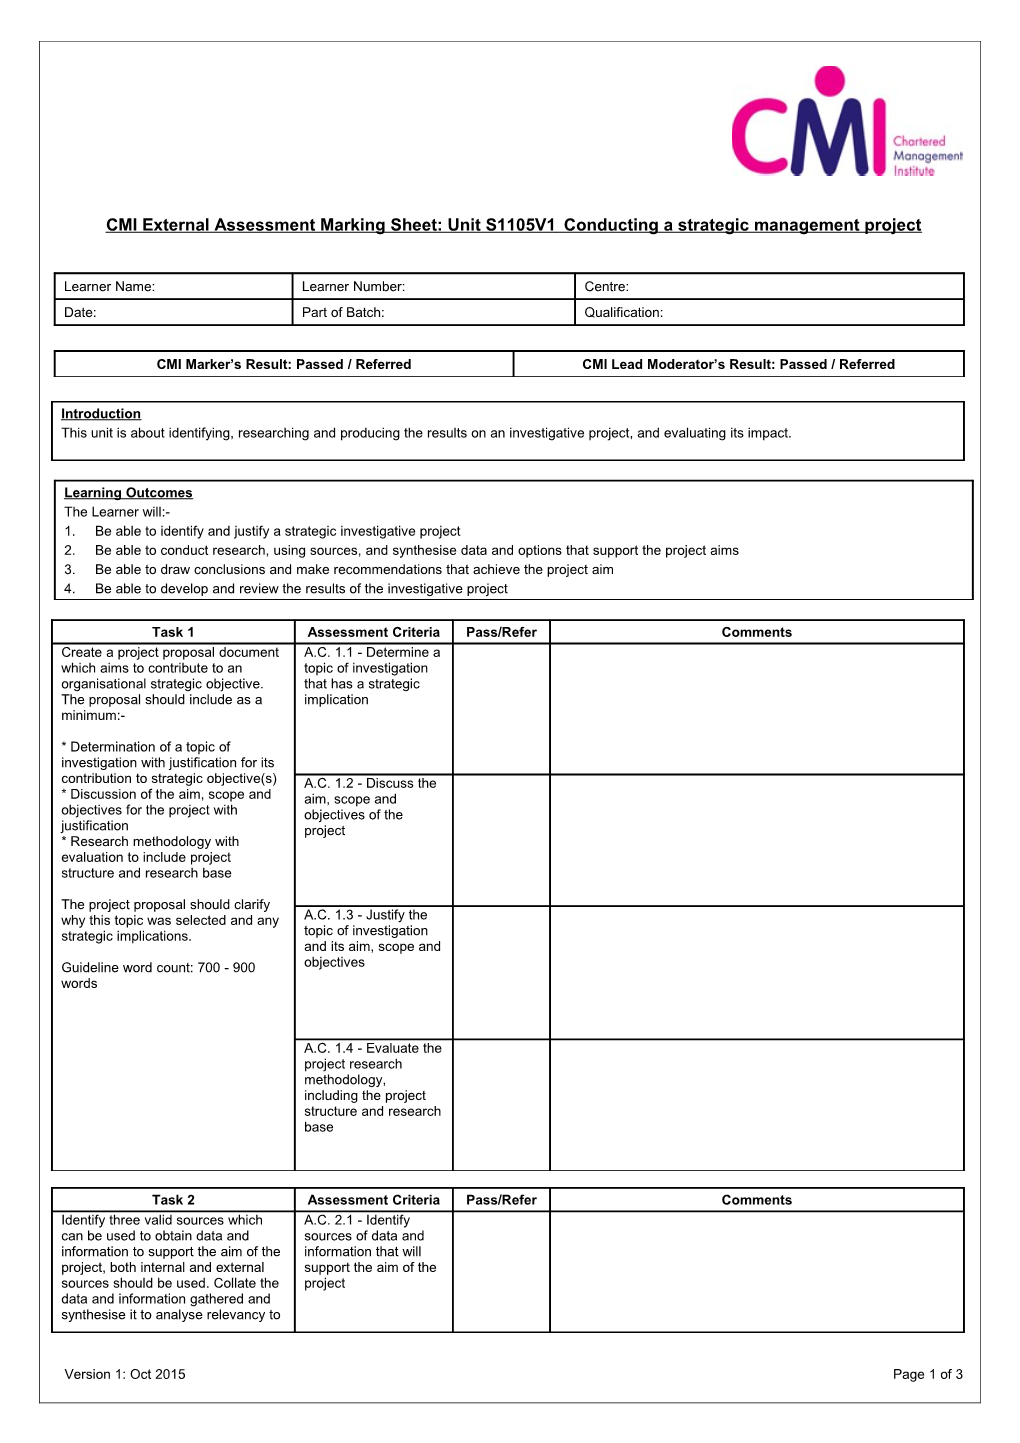 CMI External Assessment Marking Sheet:Unit S1105v1conducting a Strategic Management Project